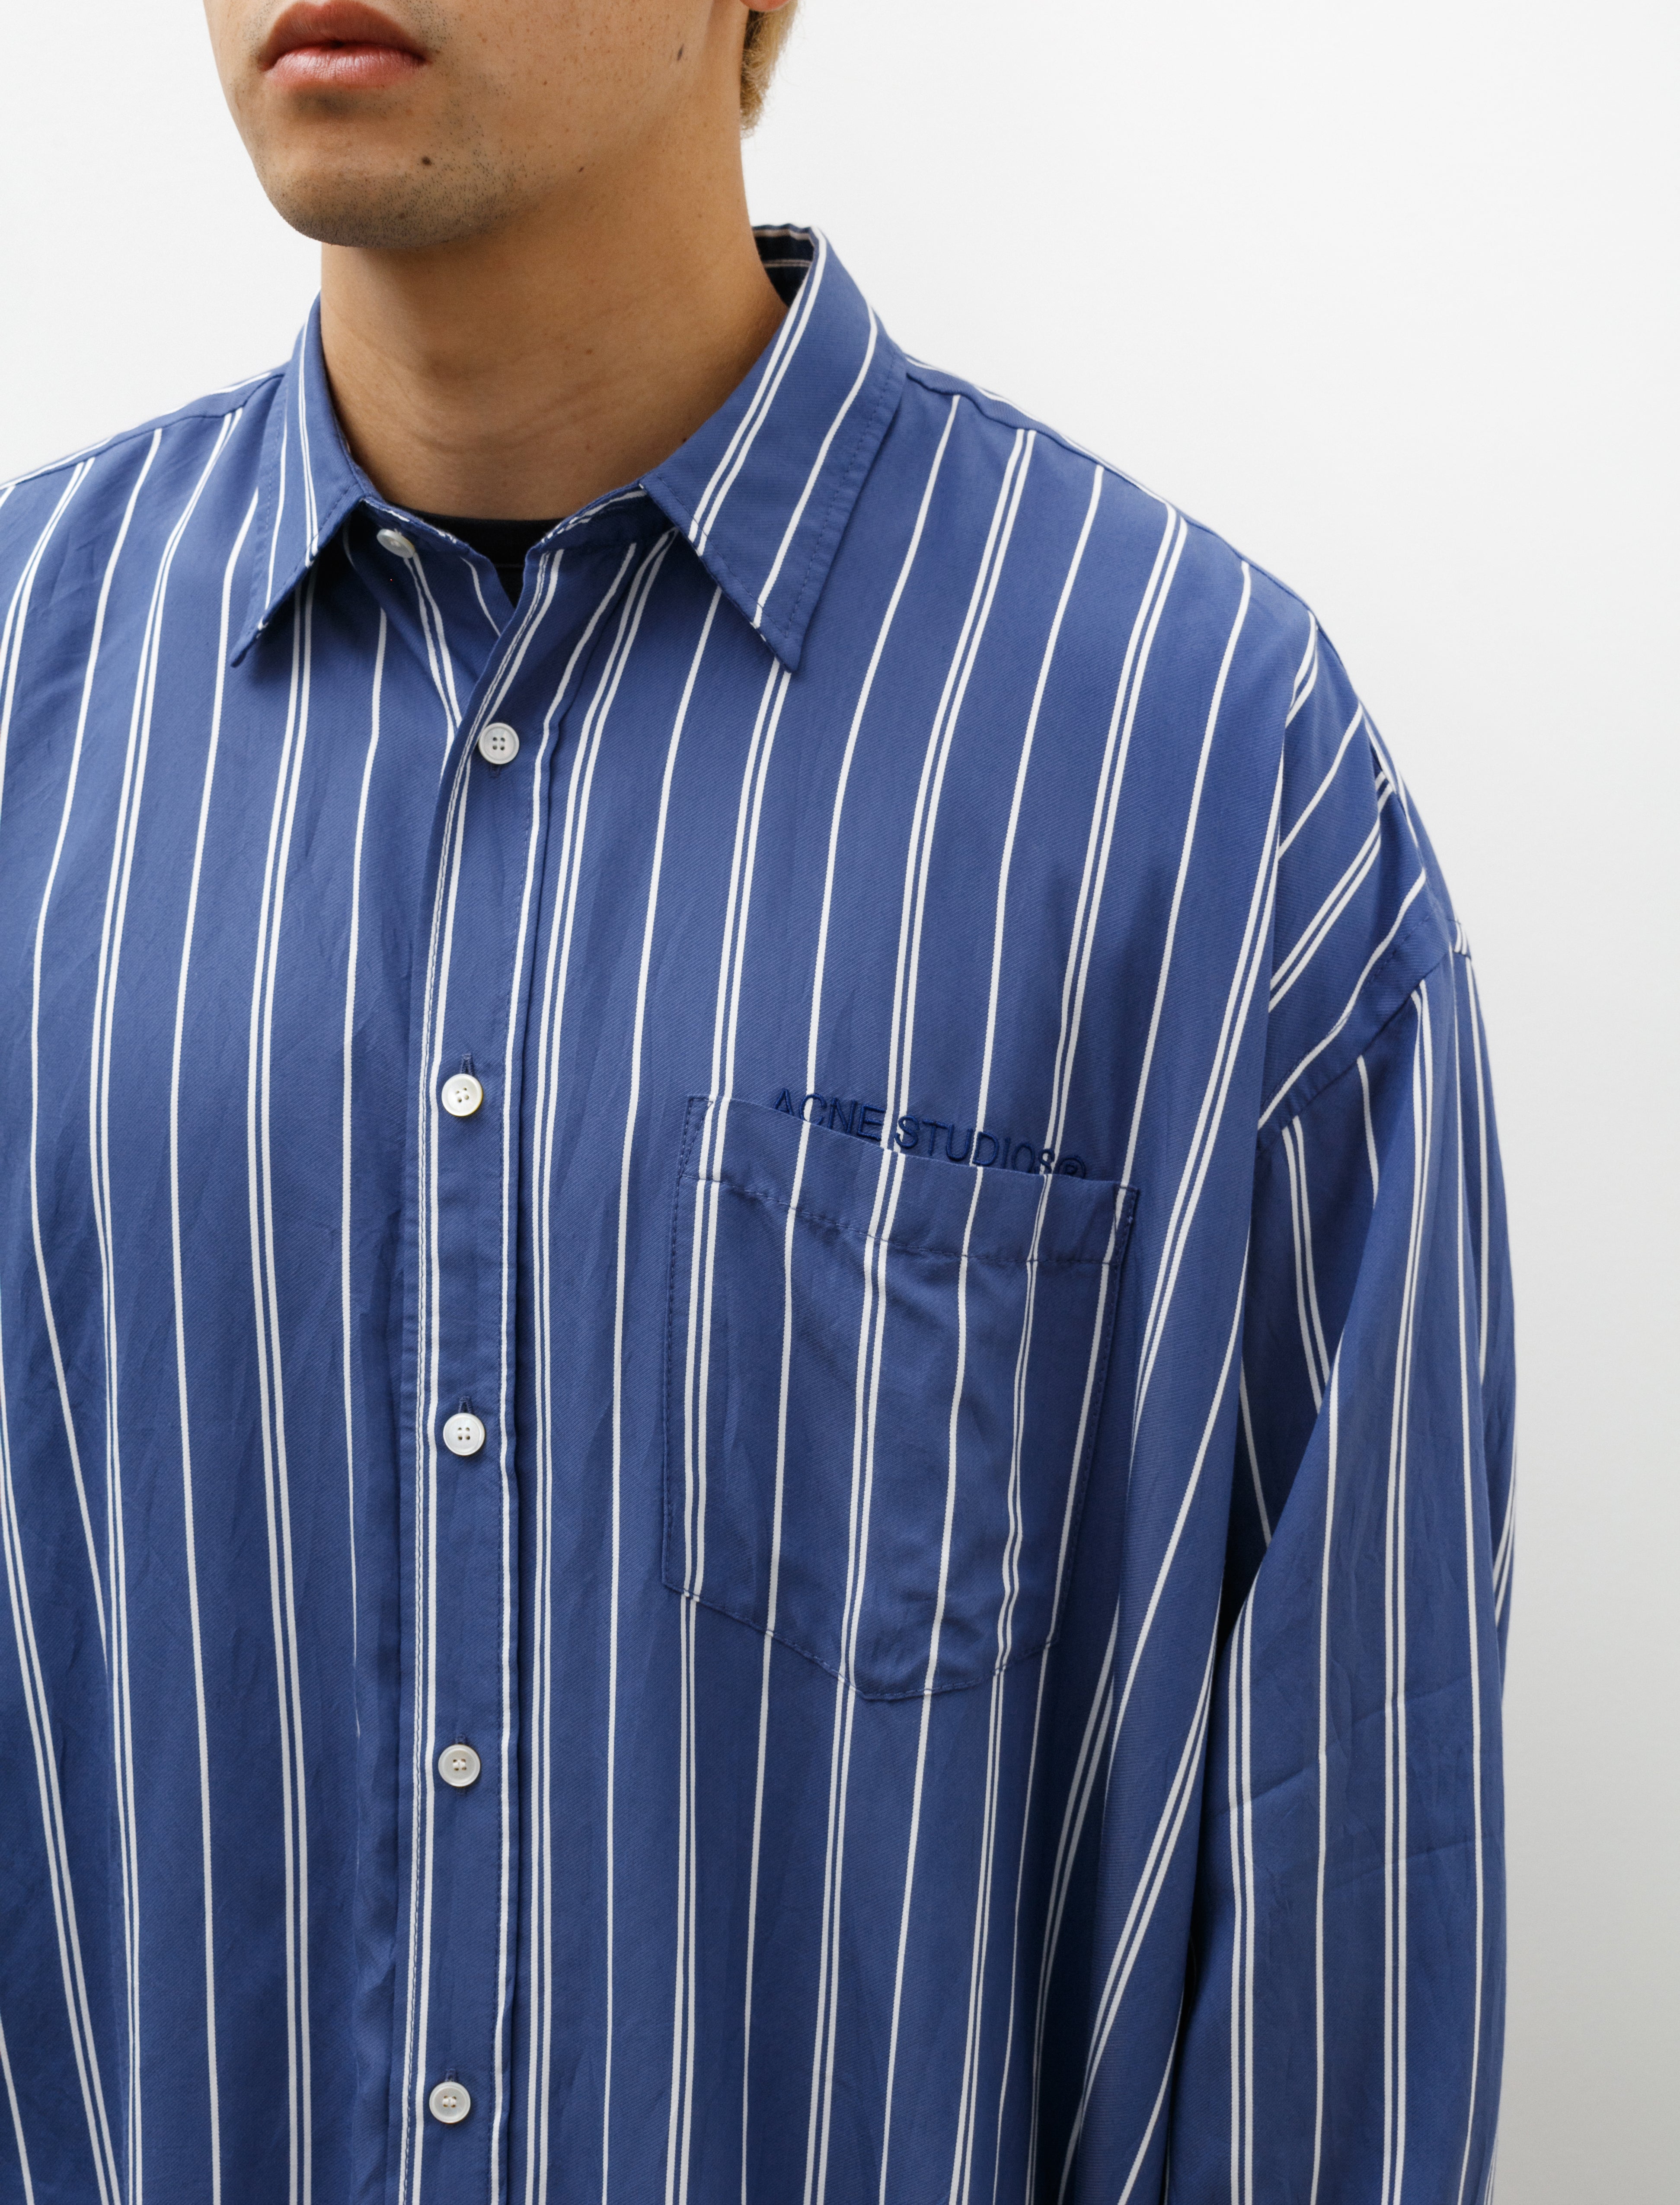 Stripe Shirt Blue White